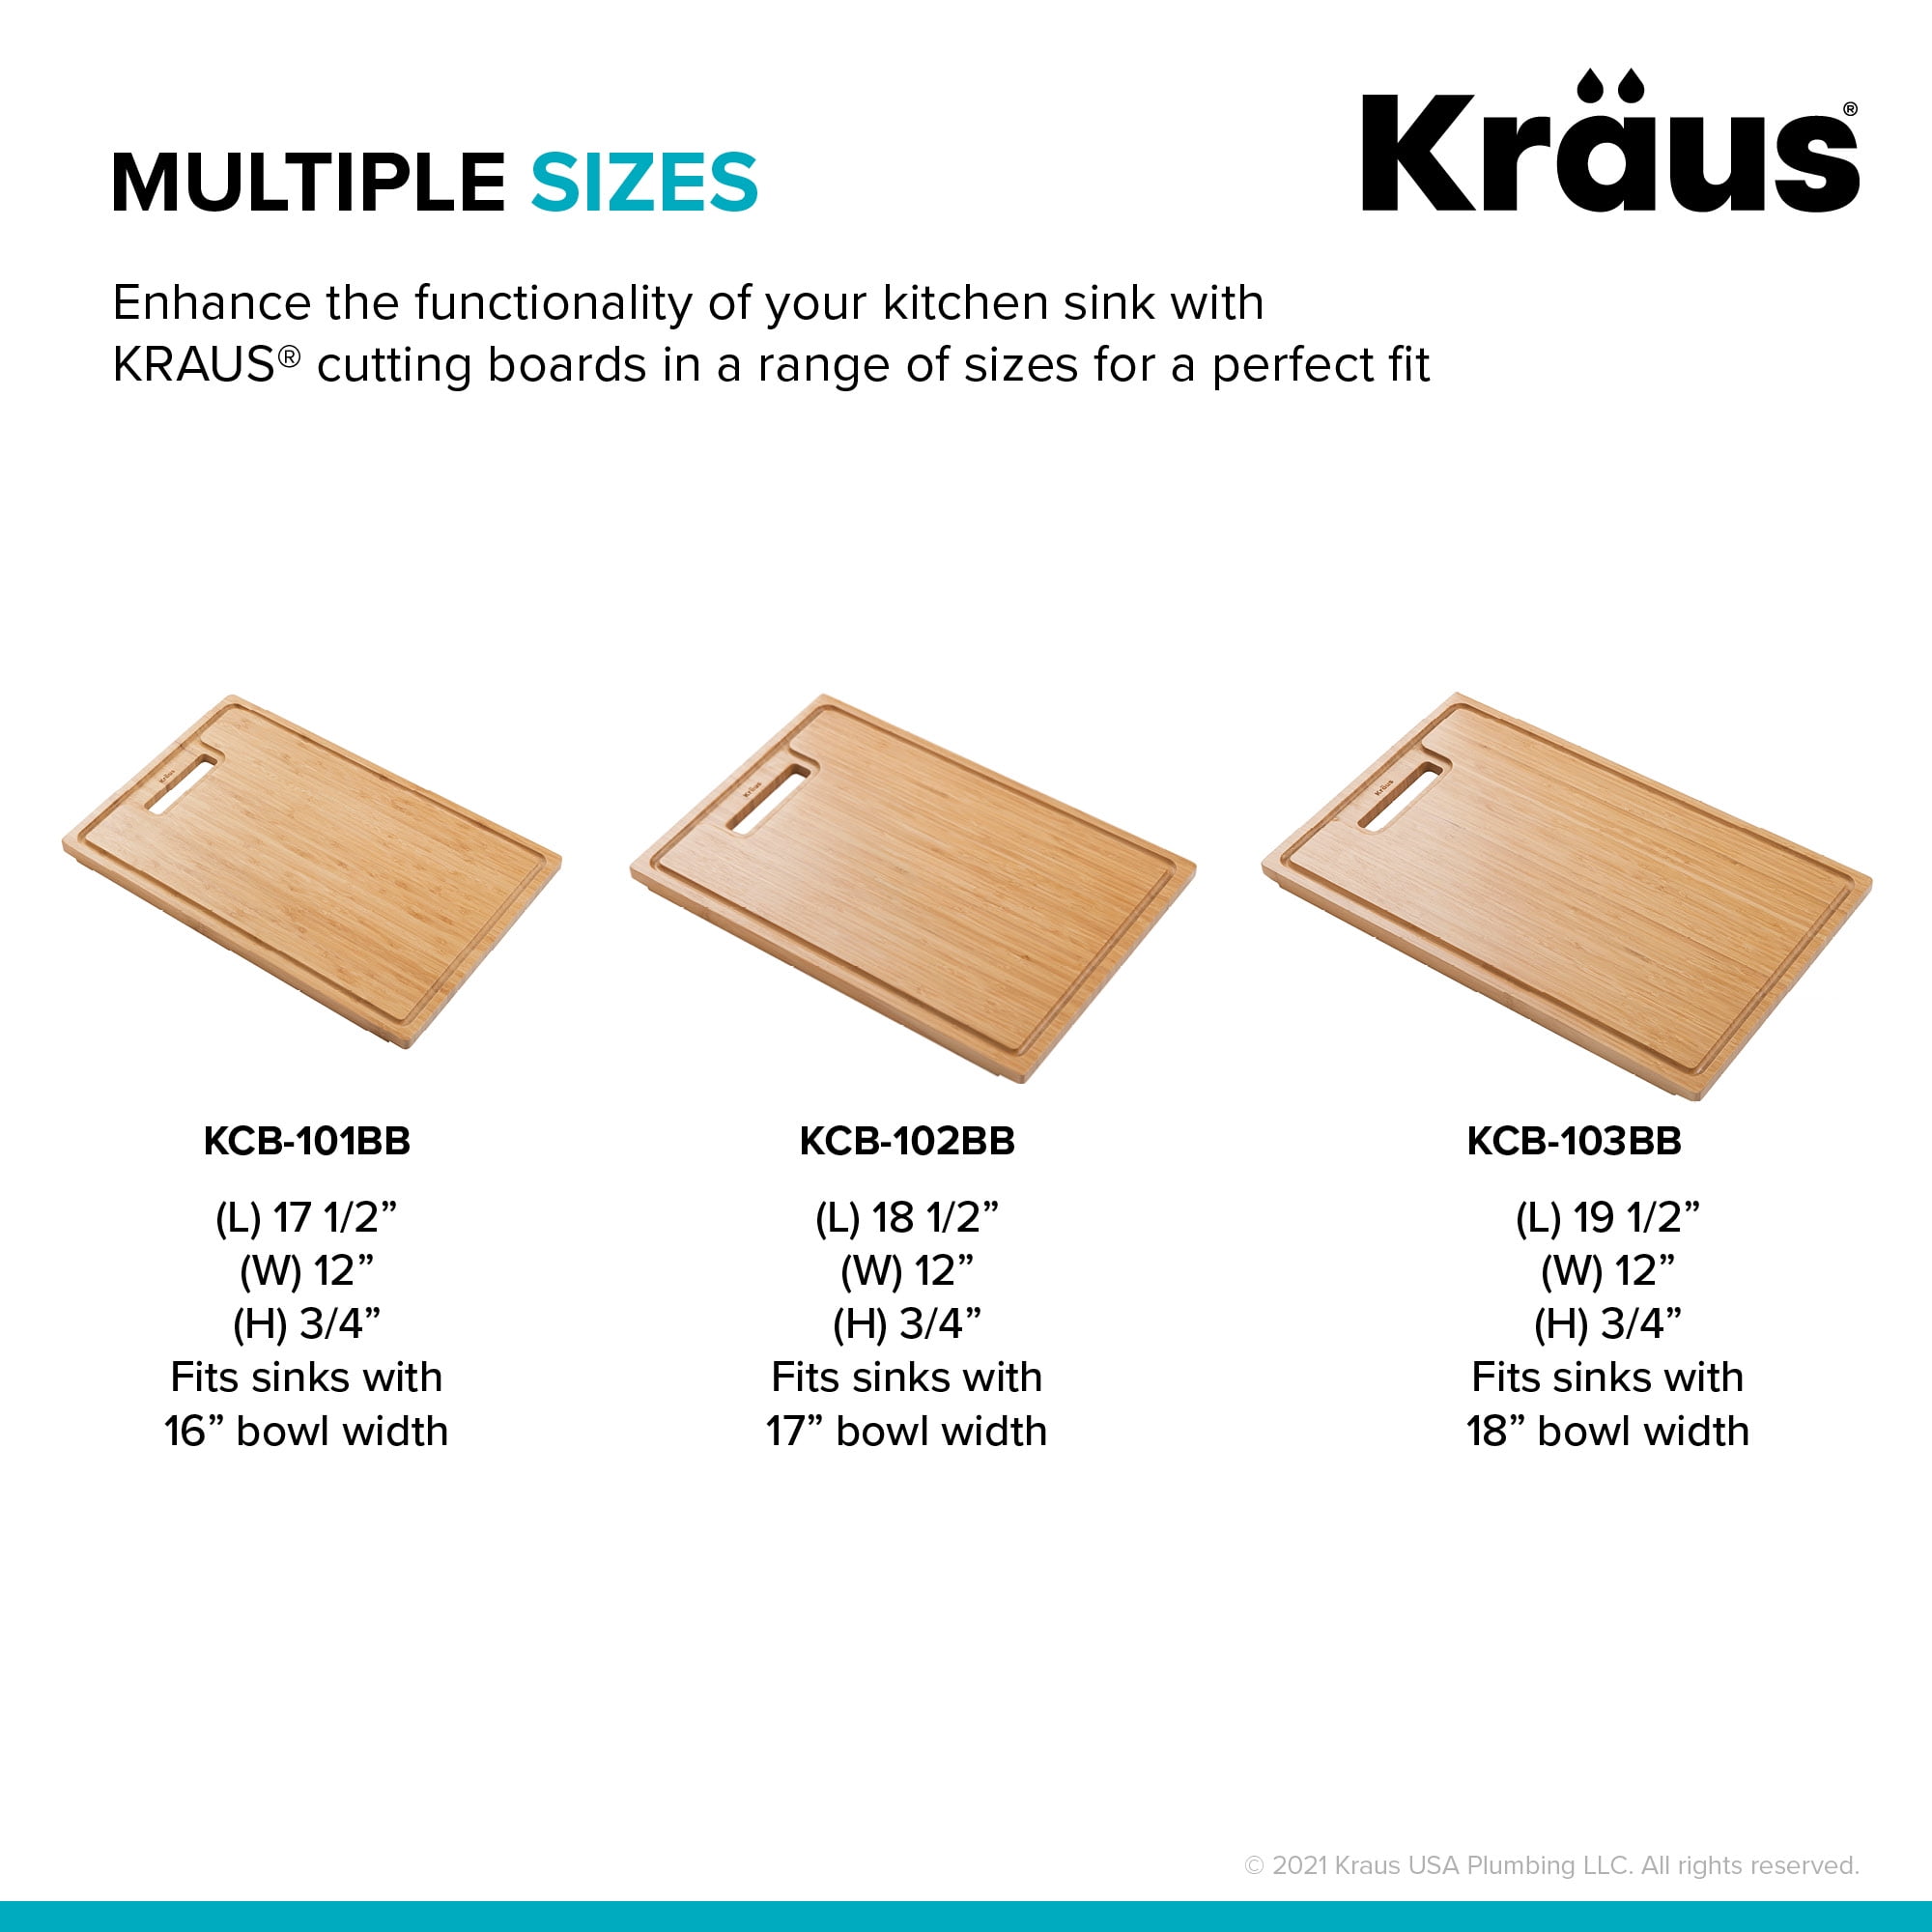 Kraus 12 in. Solid Bamboo Workstation Kitchen Sink Cutting Board